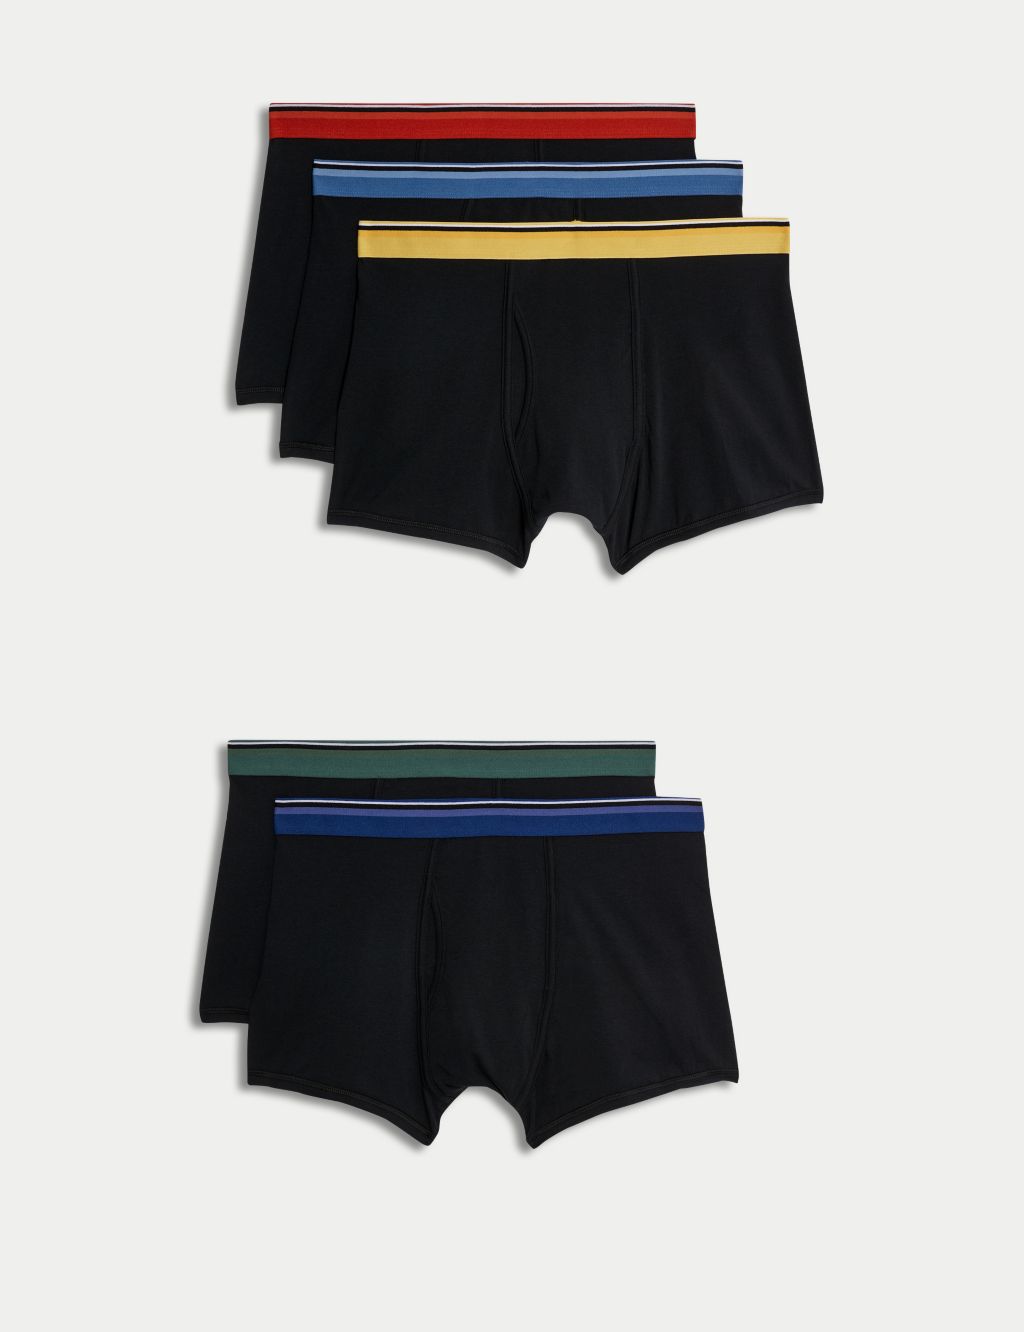 David Jones - Is your underwear drawer in need of an